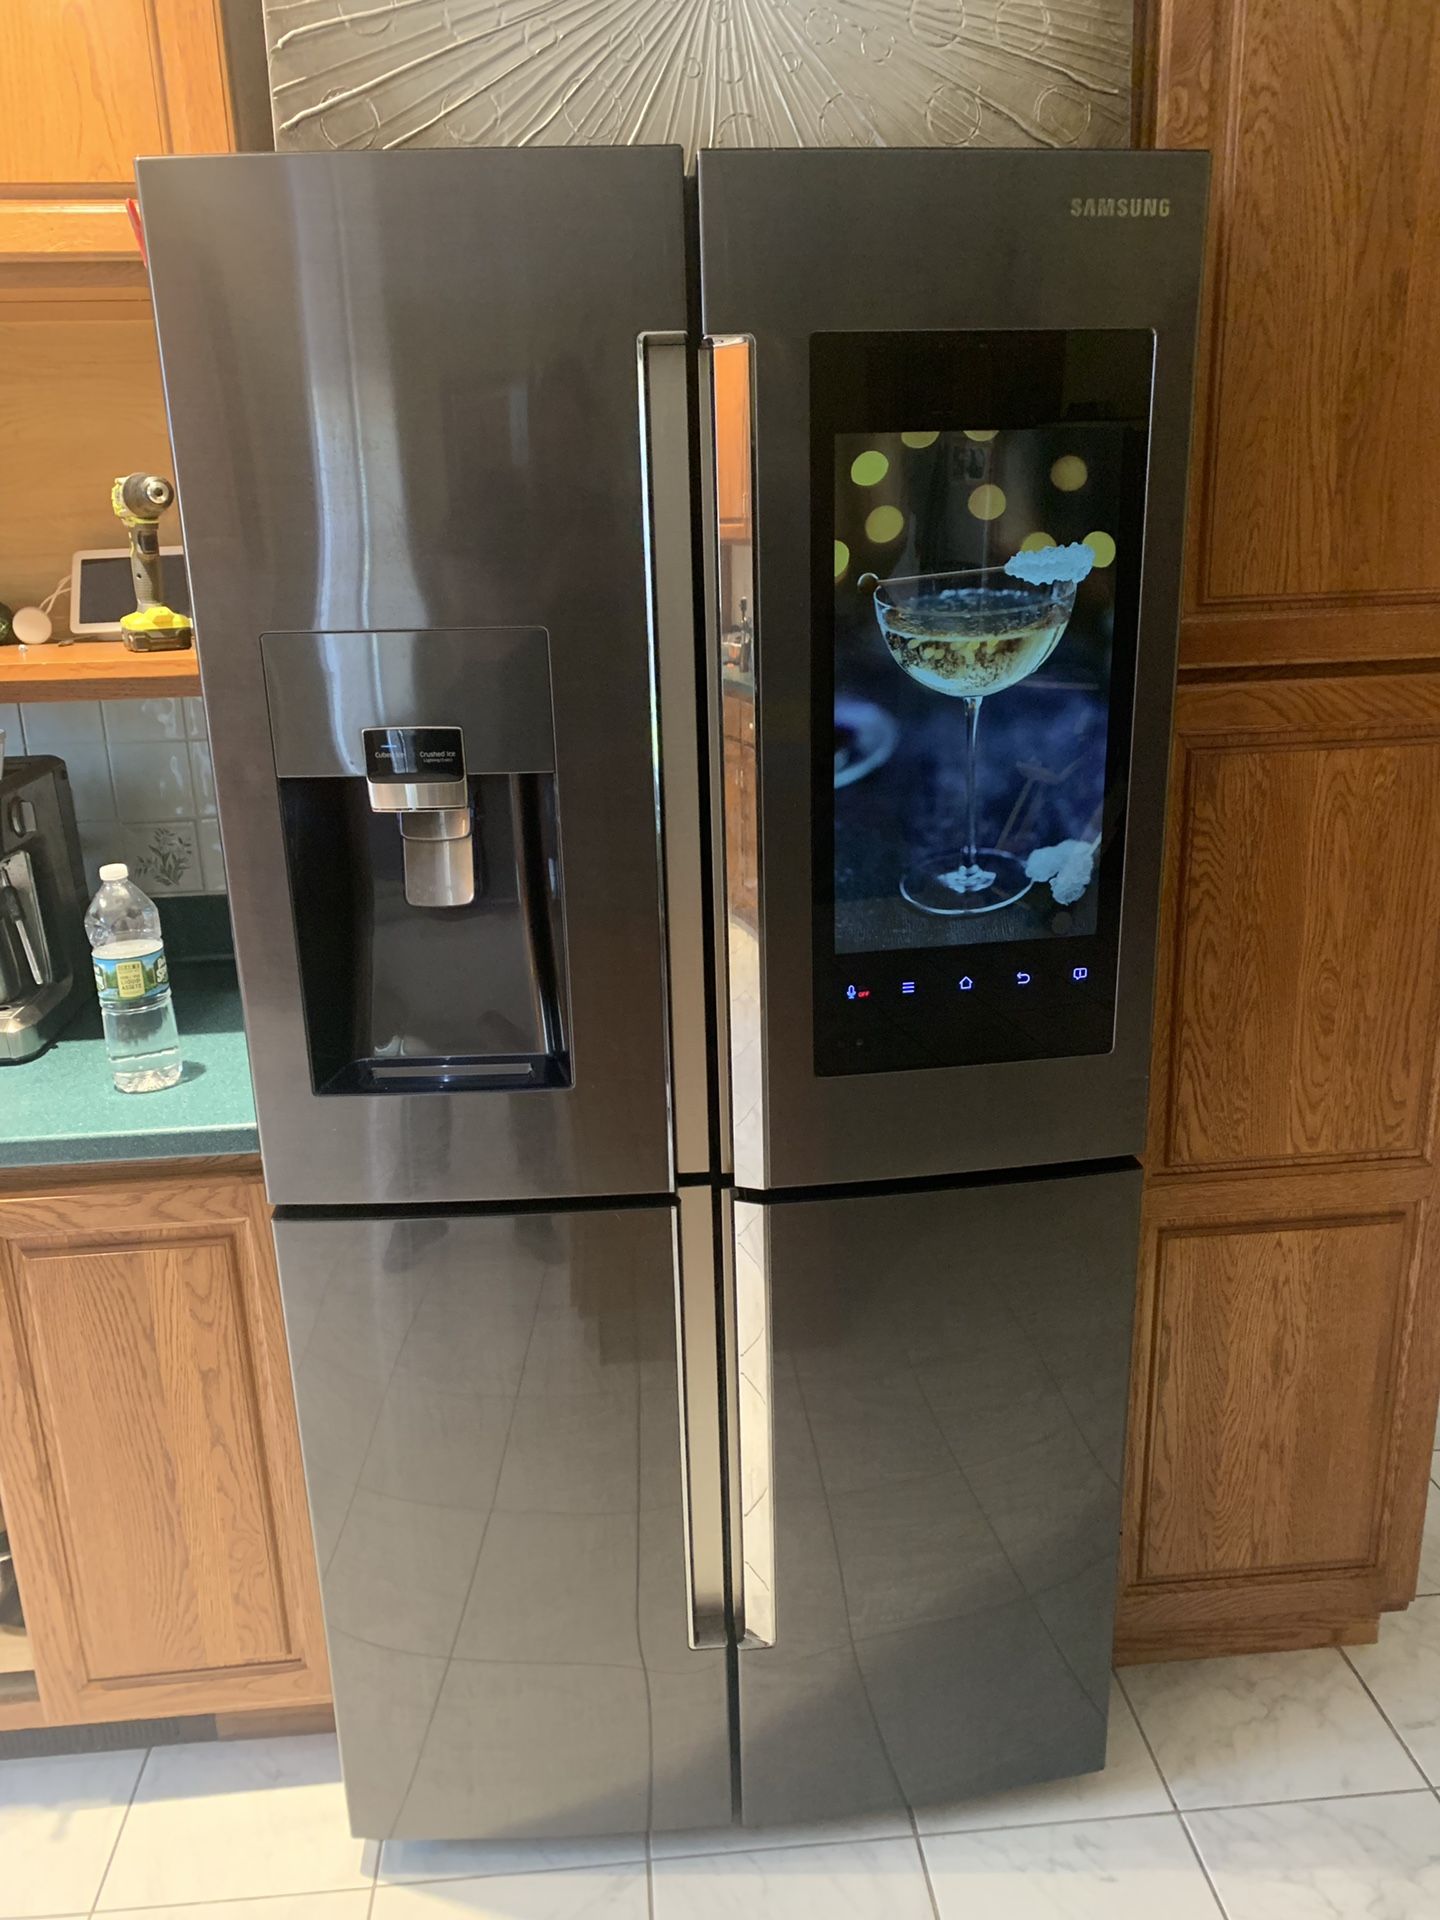 Samsung smart hub fridge